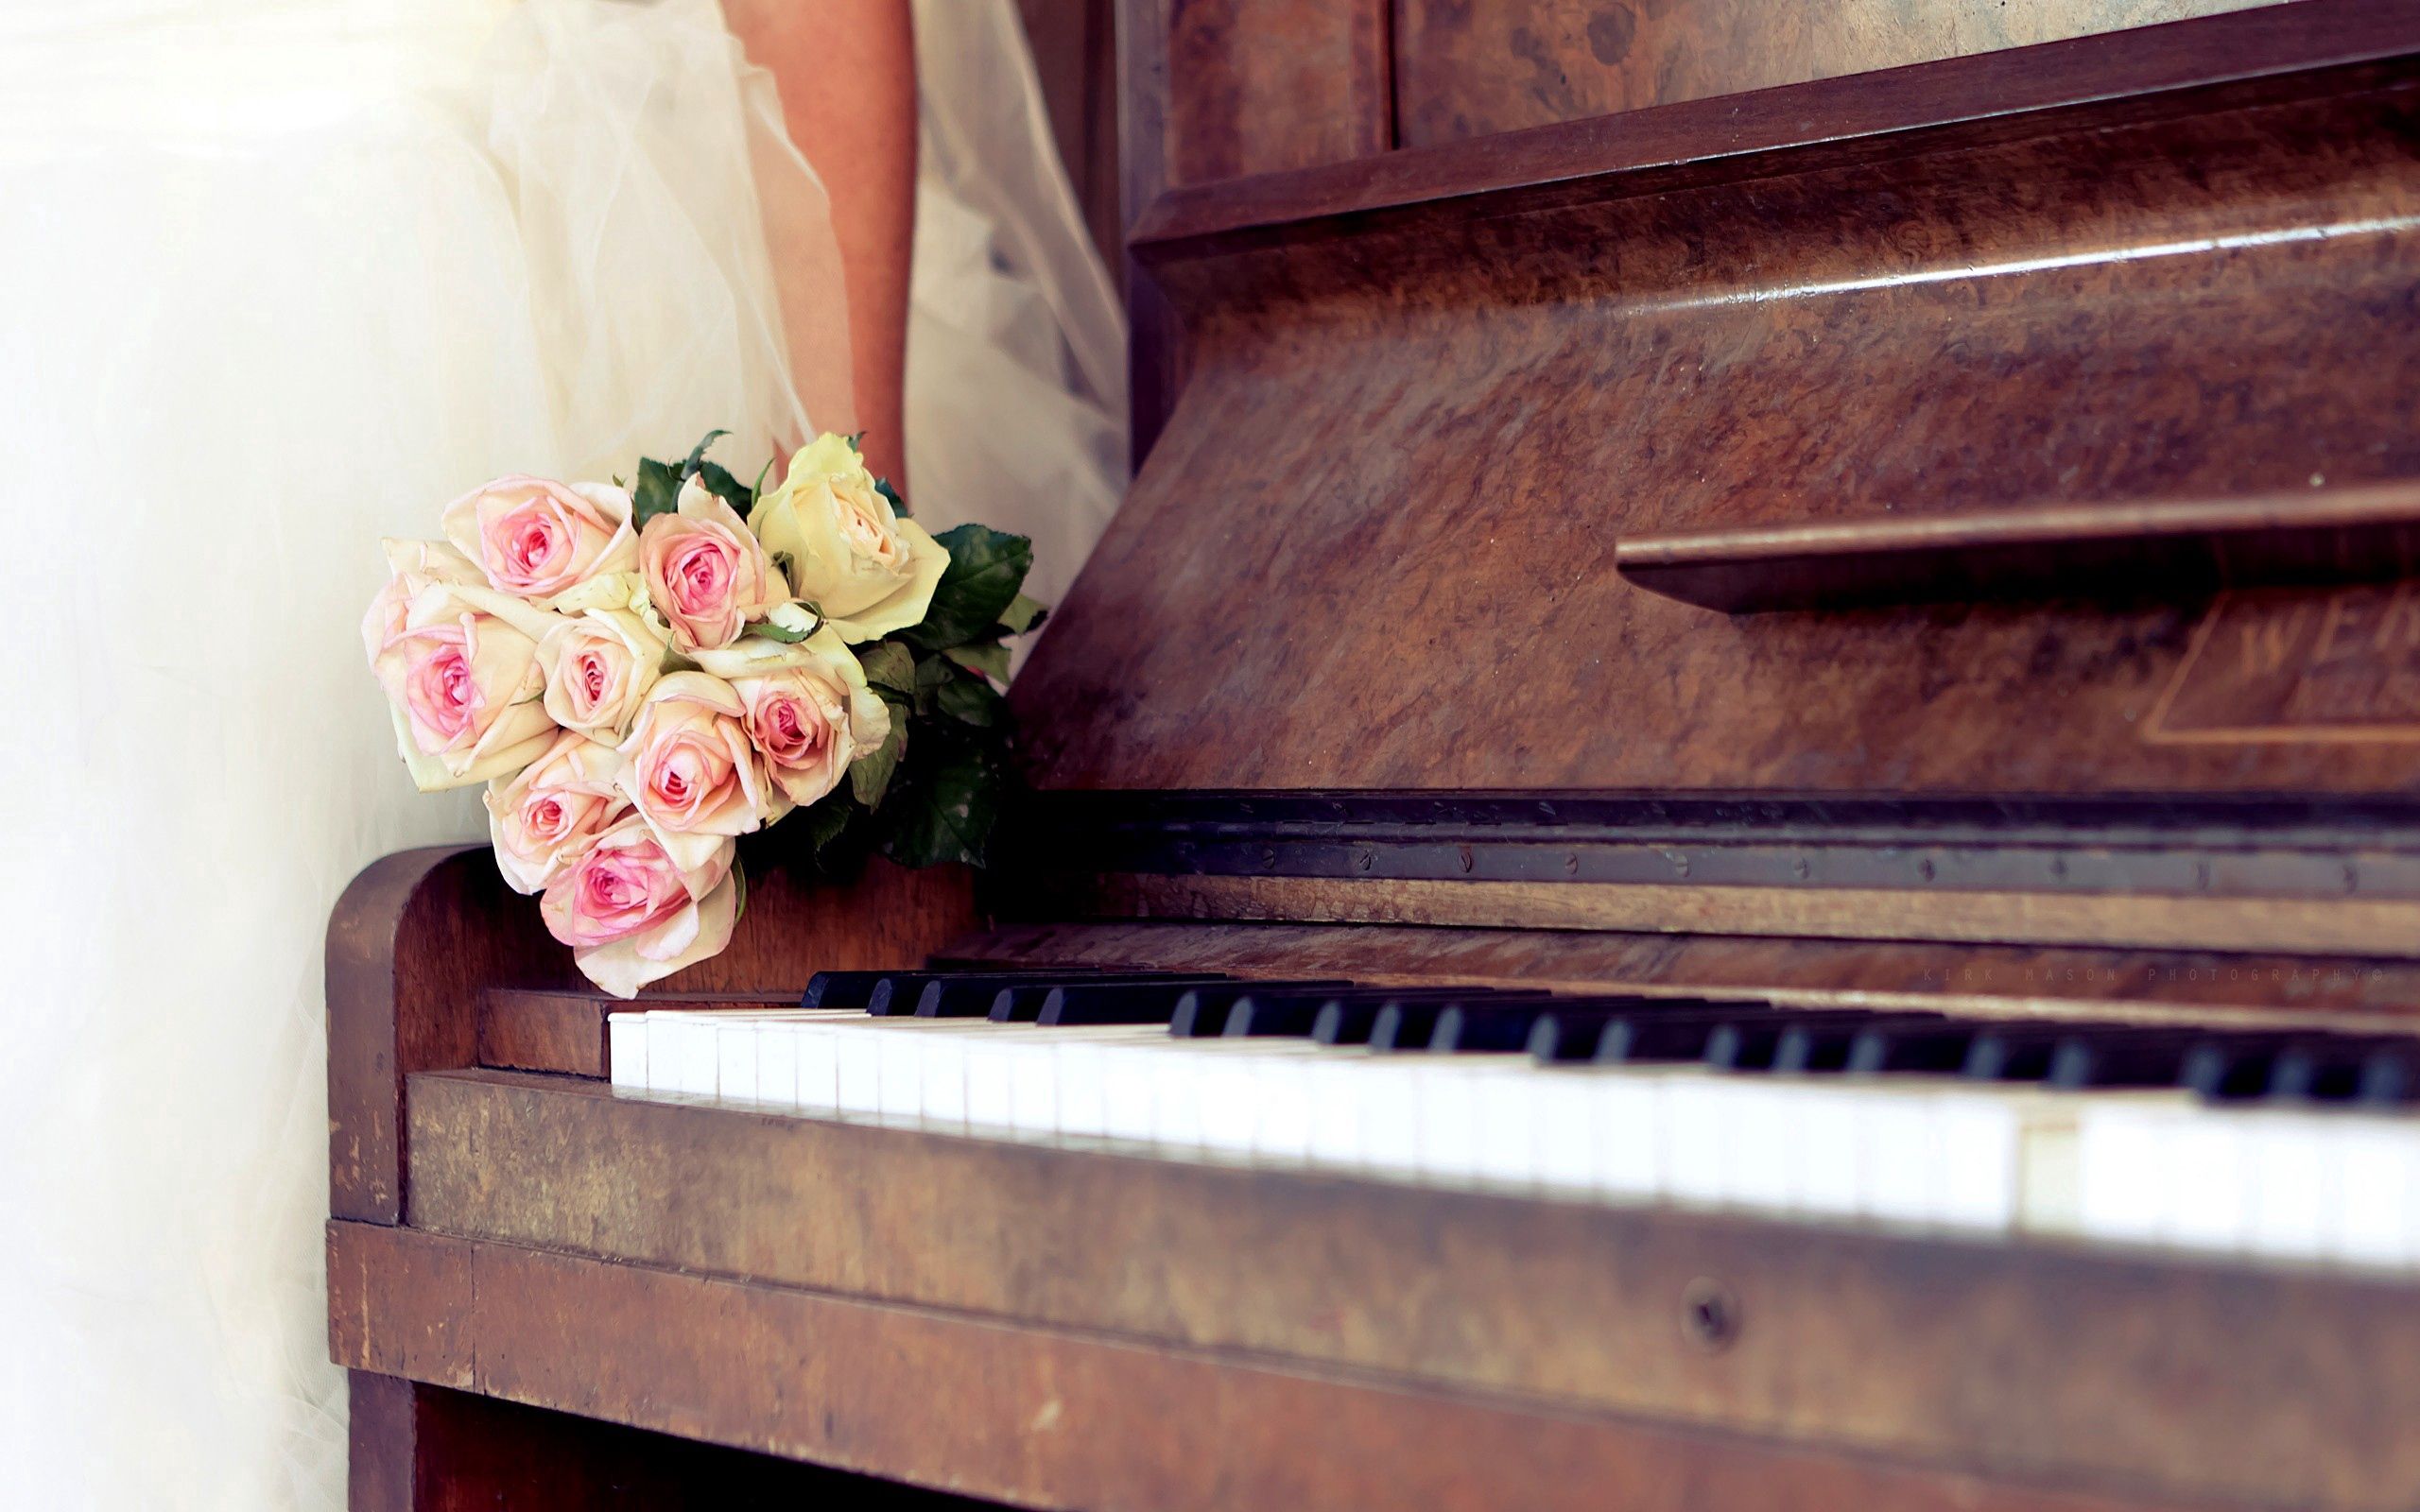 Lock Screen PC Wallpaper music, flowers, roses, piano, bouquet, bride